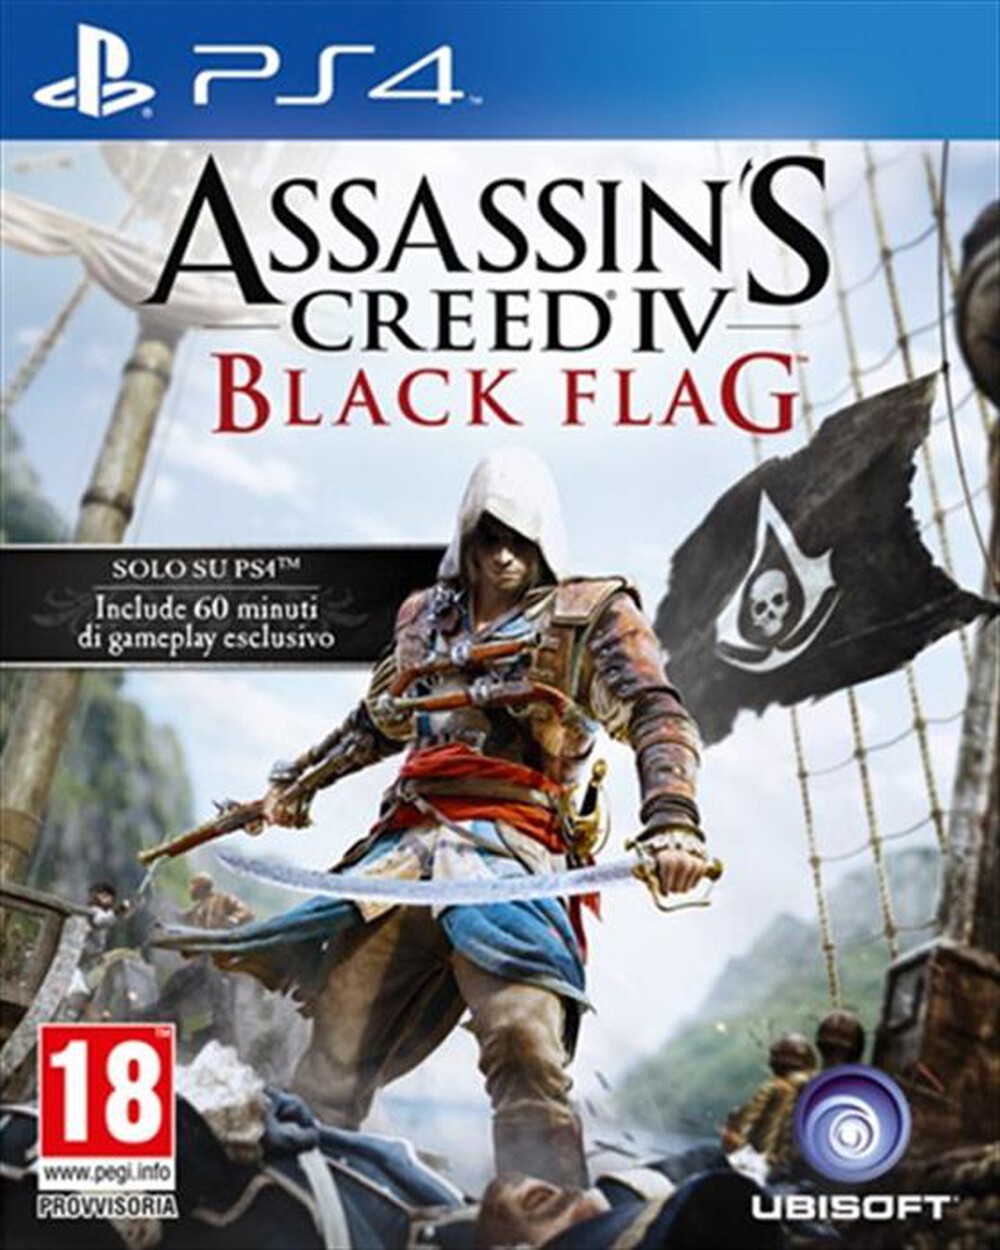 "UBISOFT - Assassin's Creed 4 Black Flag PS4"